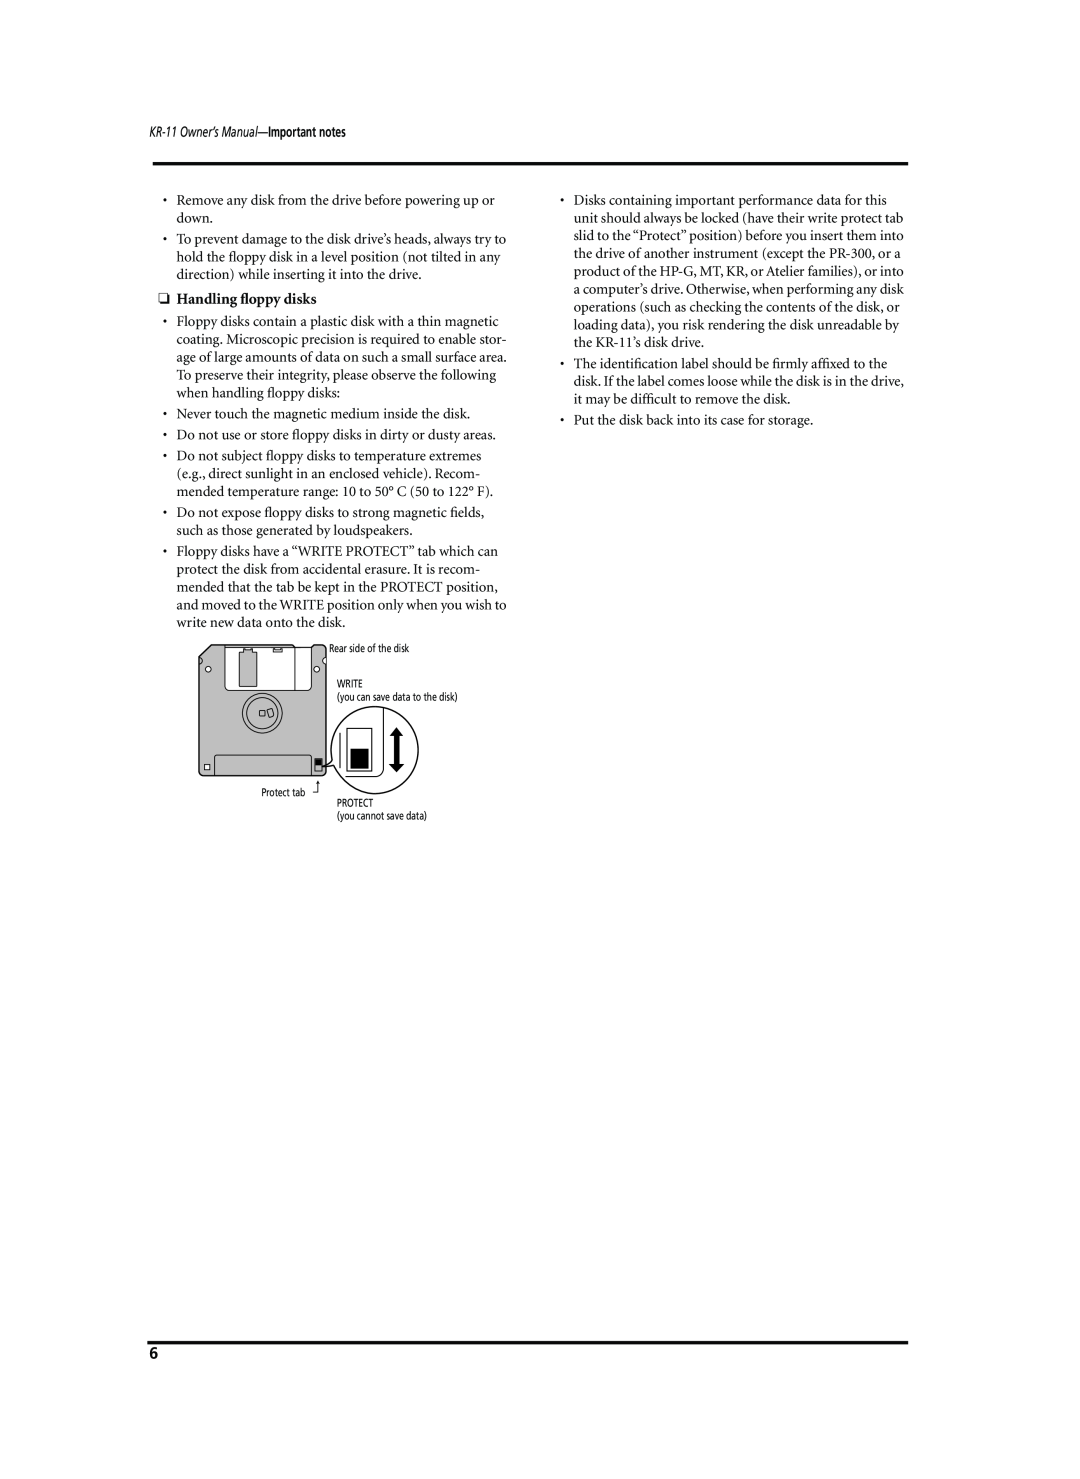 Roland owner manual Handling ﬂoppy disks, KR-11 Owner’s Manual-Important notes 